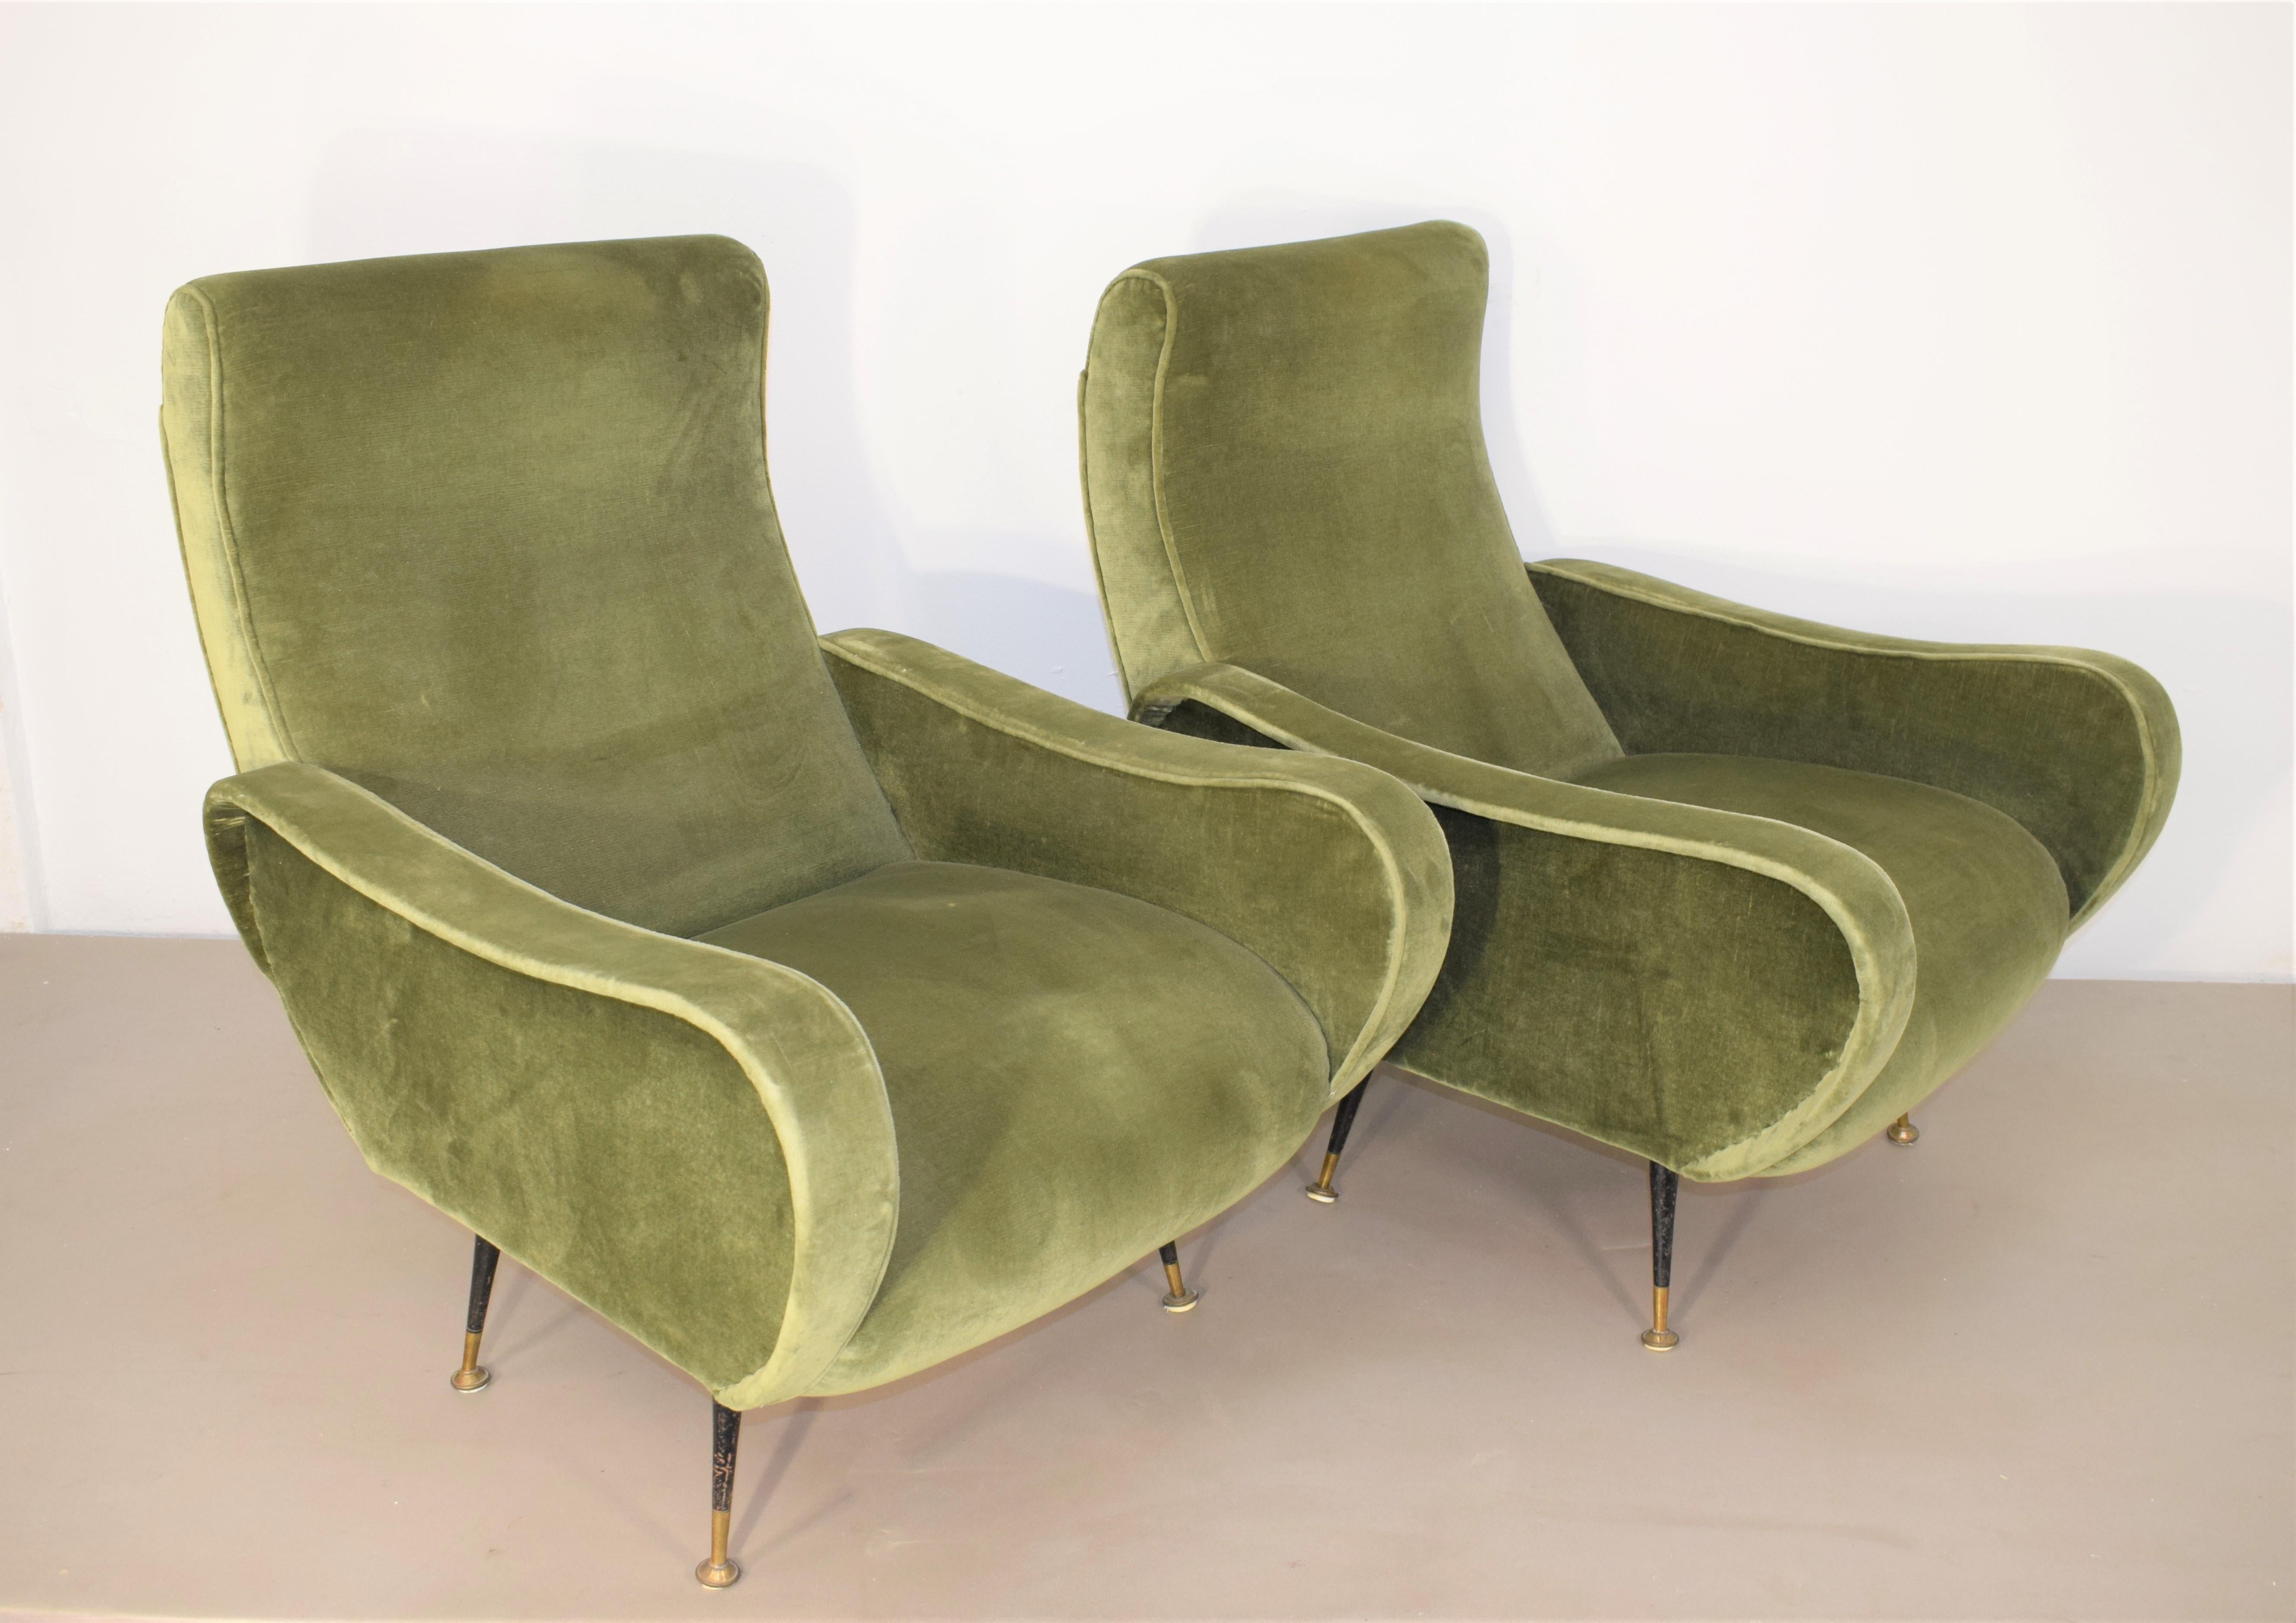 Pair of Italian armchairs, velvet, brass and iron, 1950s
Dimensions: H= 88 cm; W= 68 cm; D= 65 cm; H seat= 40 cm.